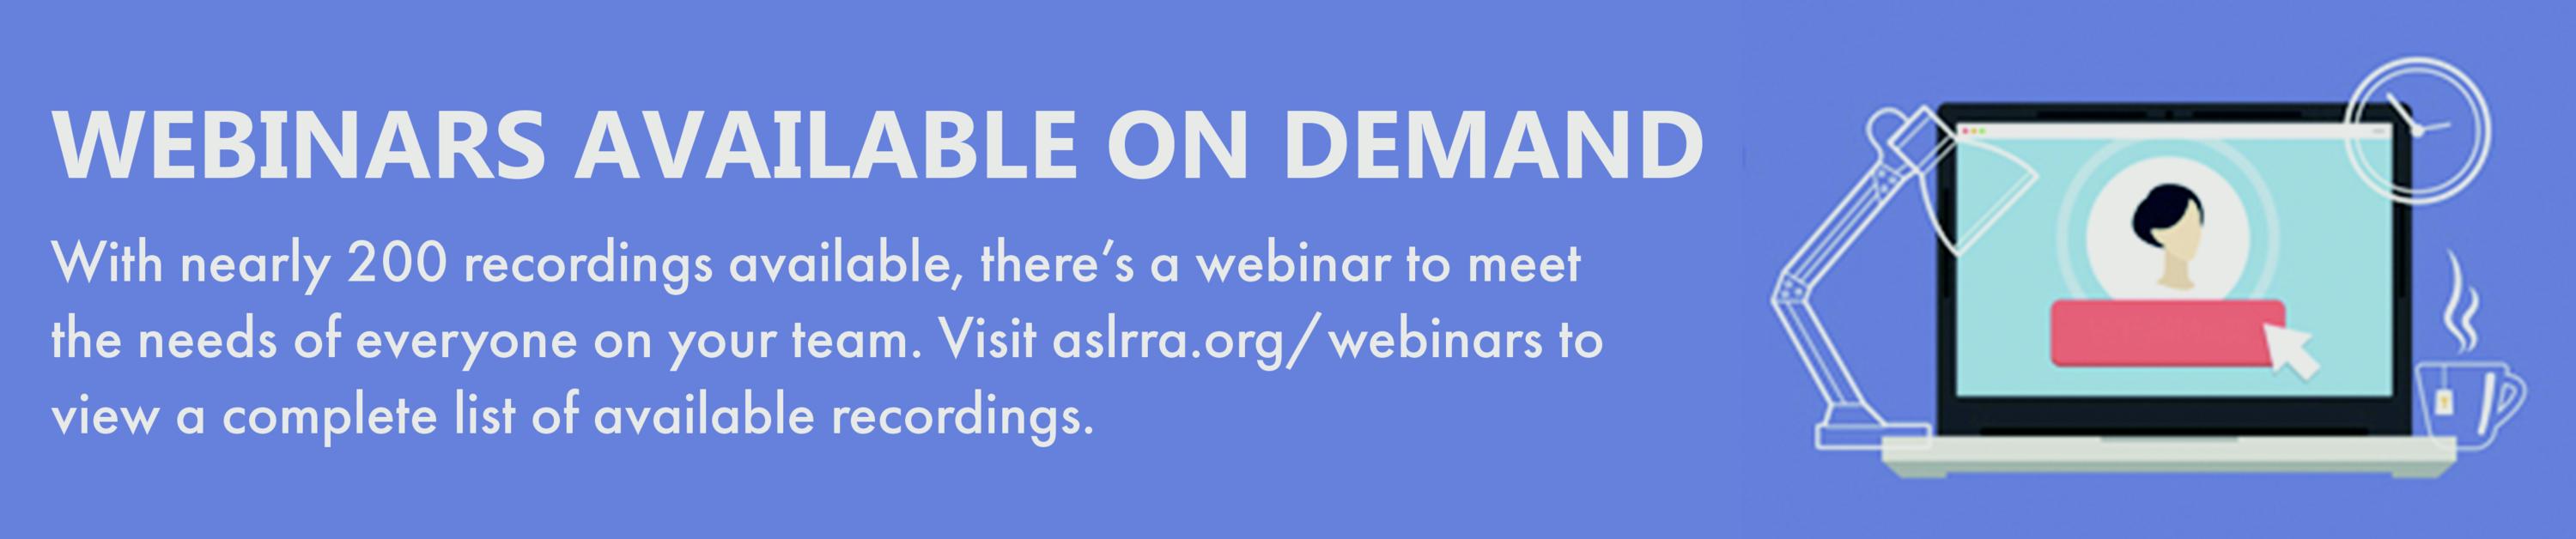 ASLRRA on-demand webinars